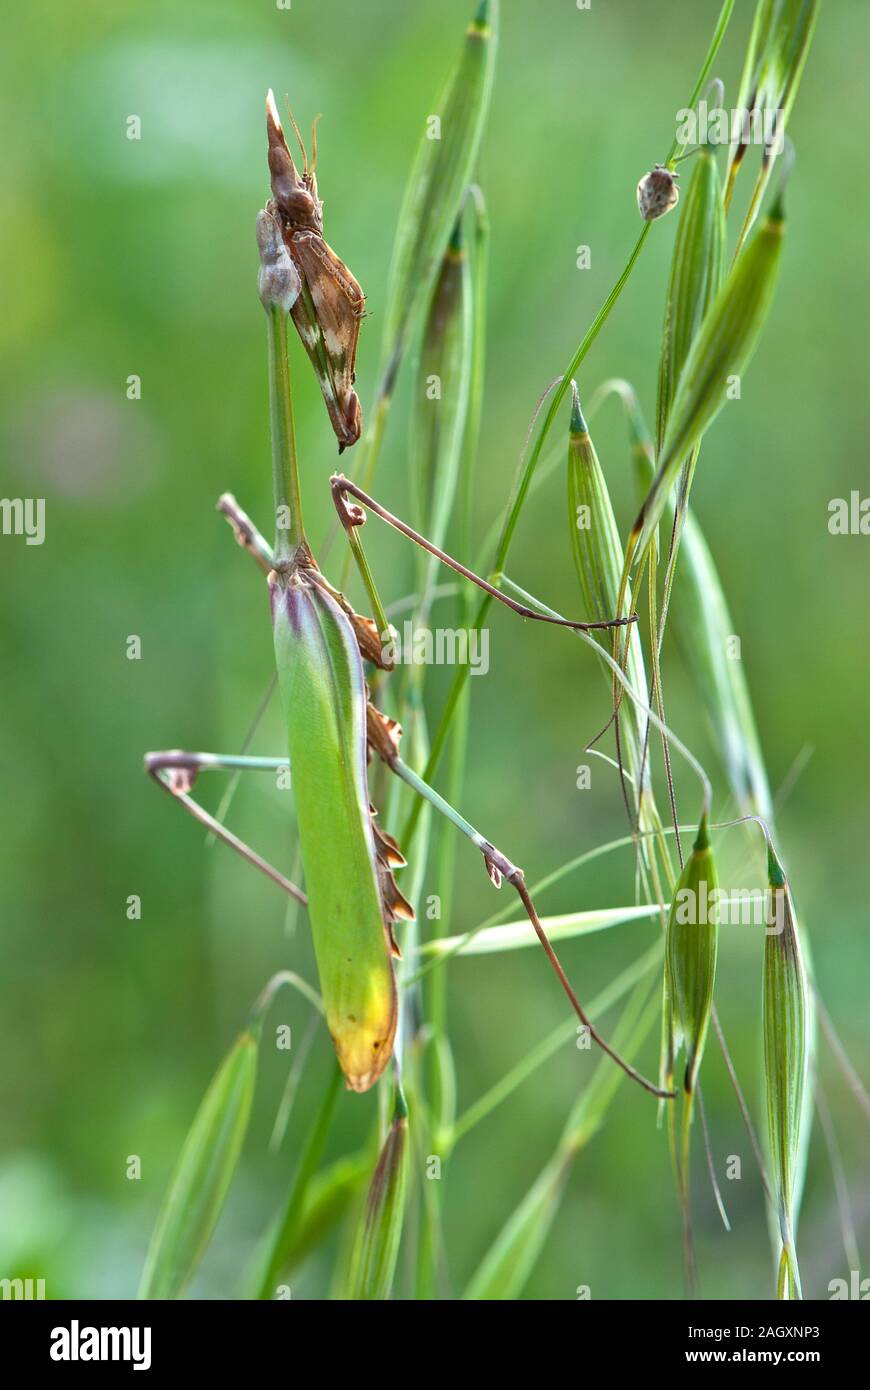 Mantis camouflage on green plant Stock Photo - Alamy